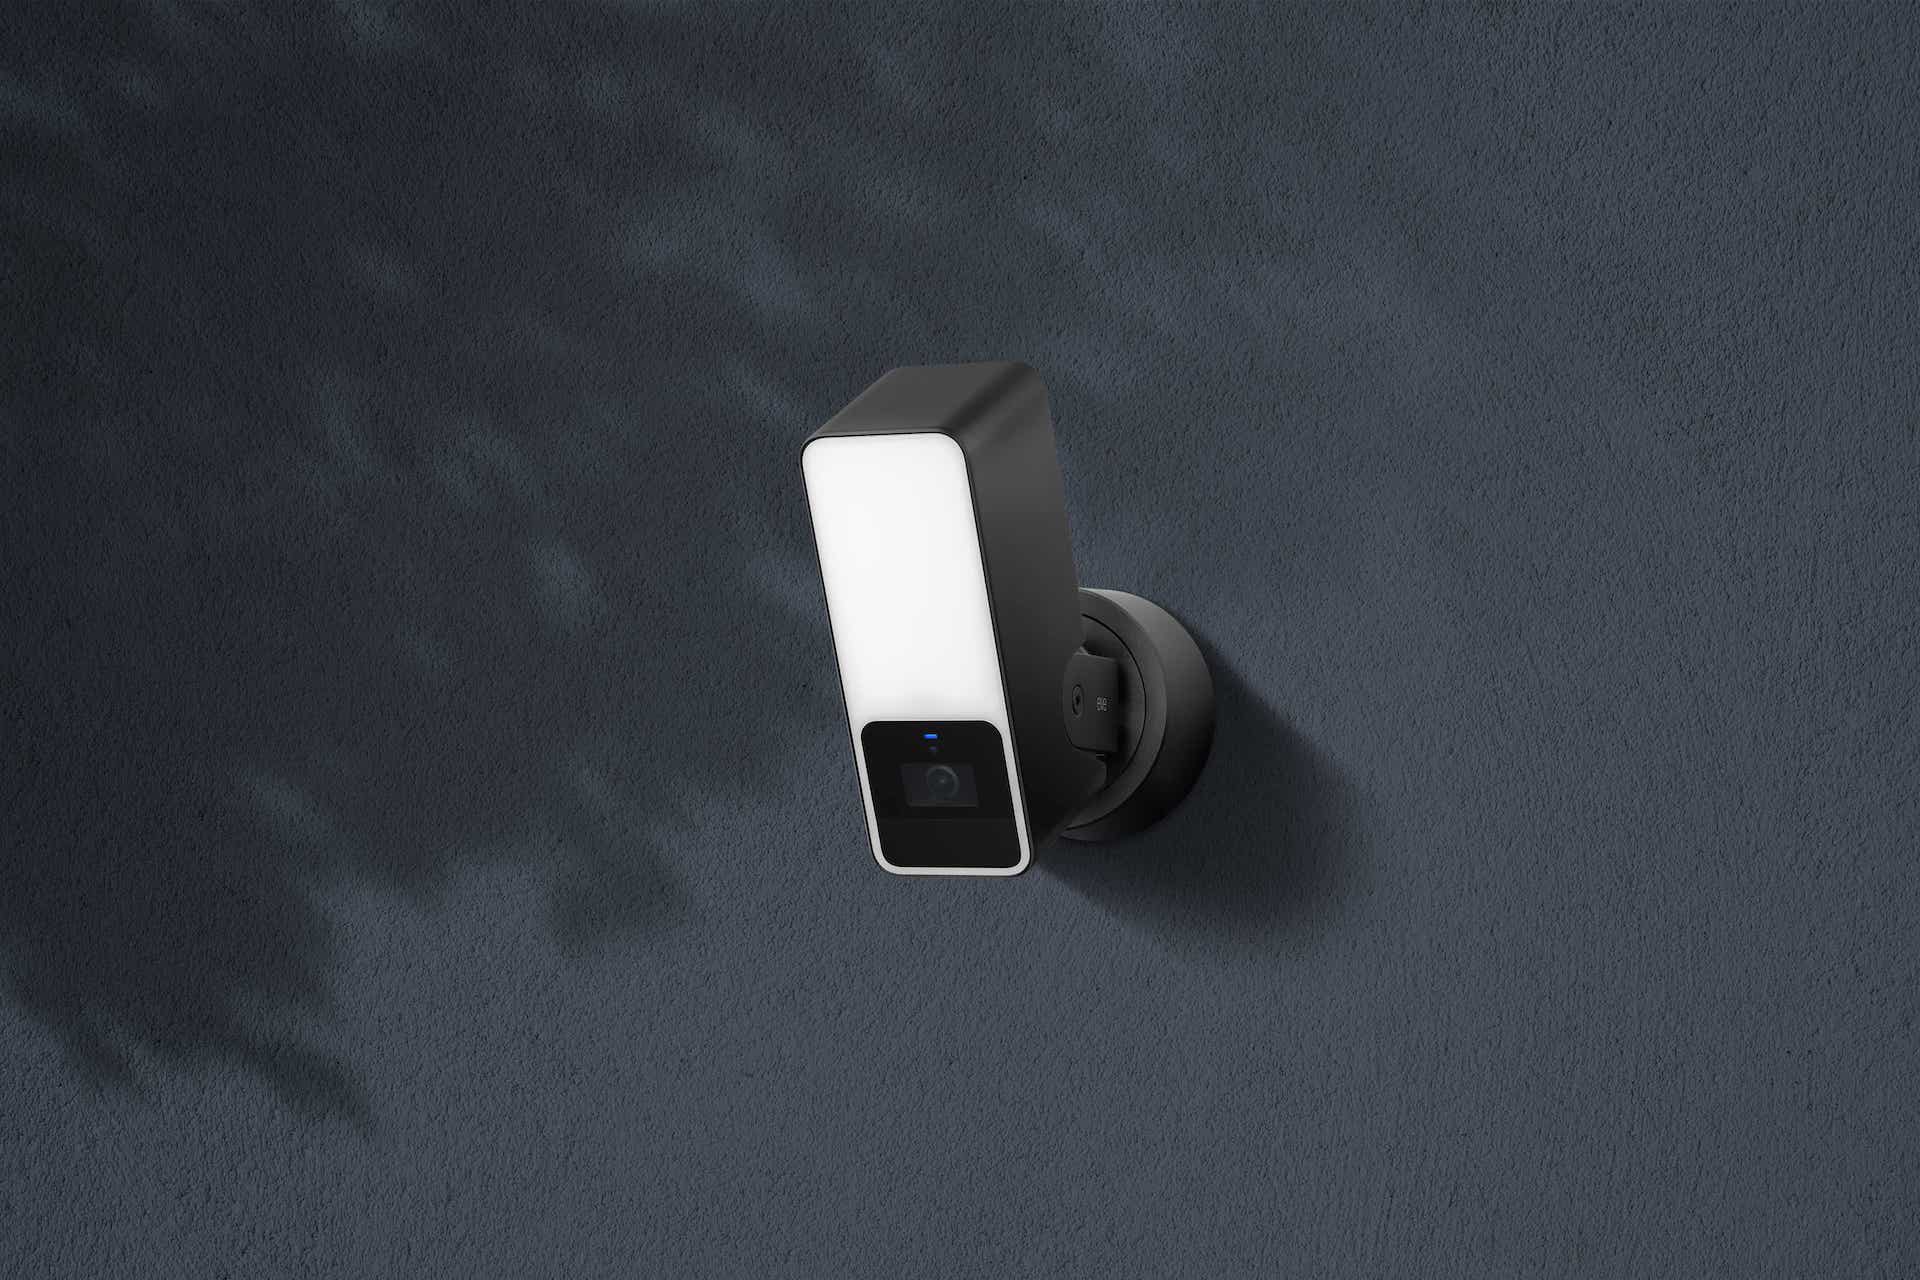 Eve Outdoor Cam - Secure floodlight camera with Apple HomeKit